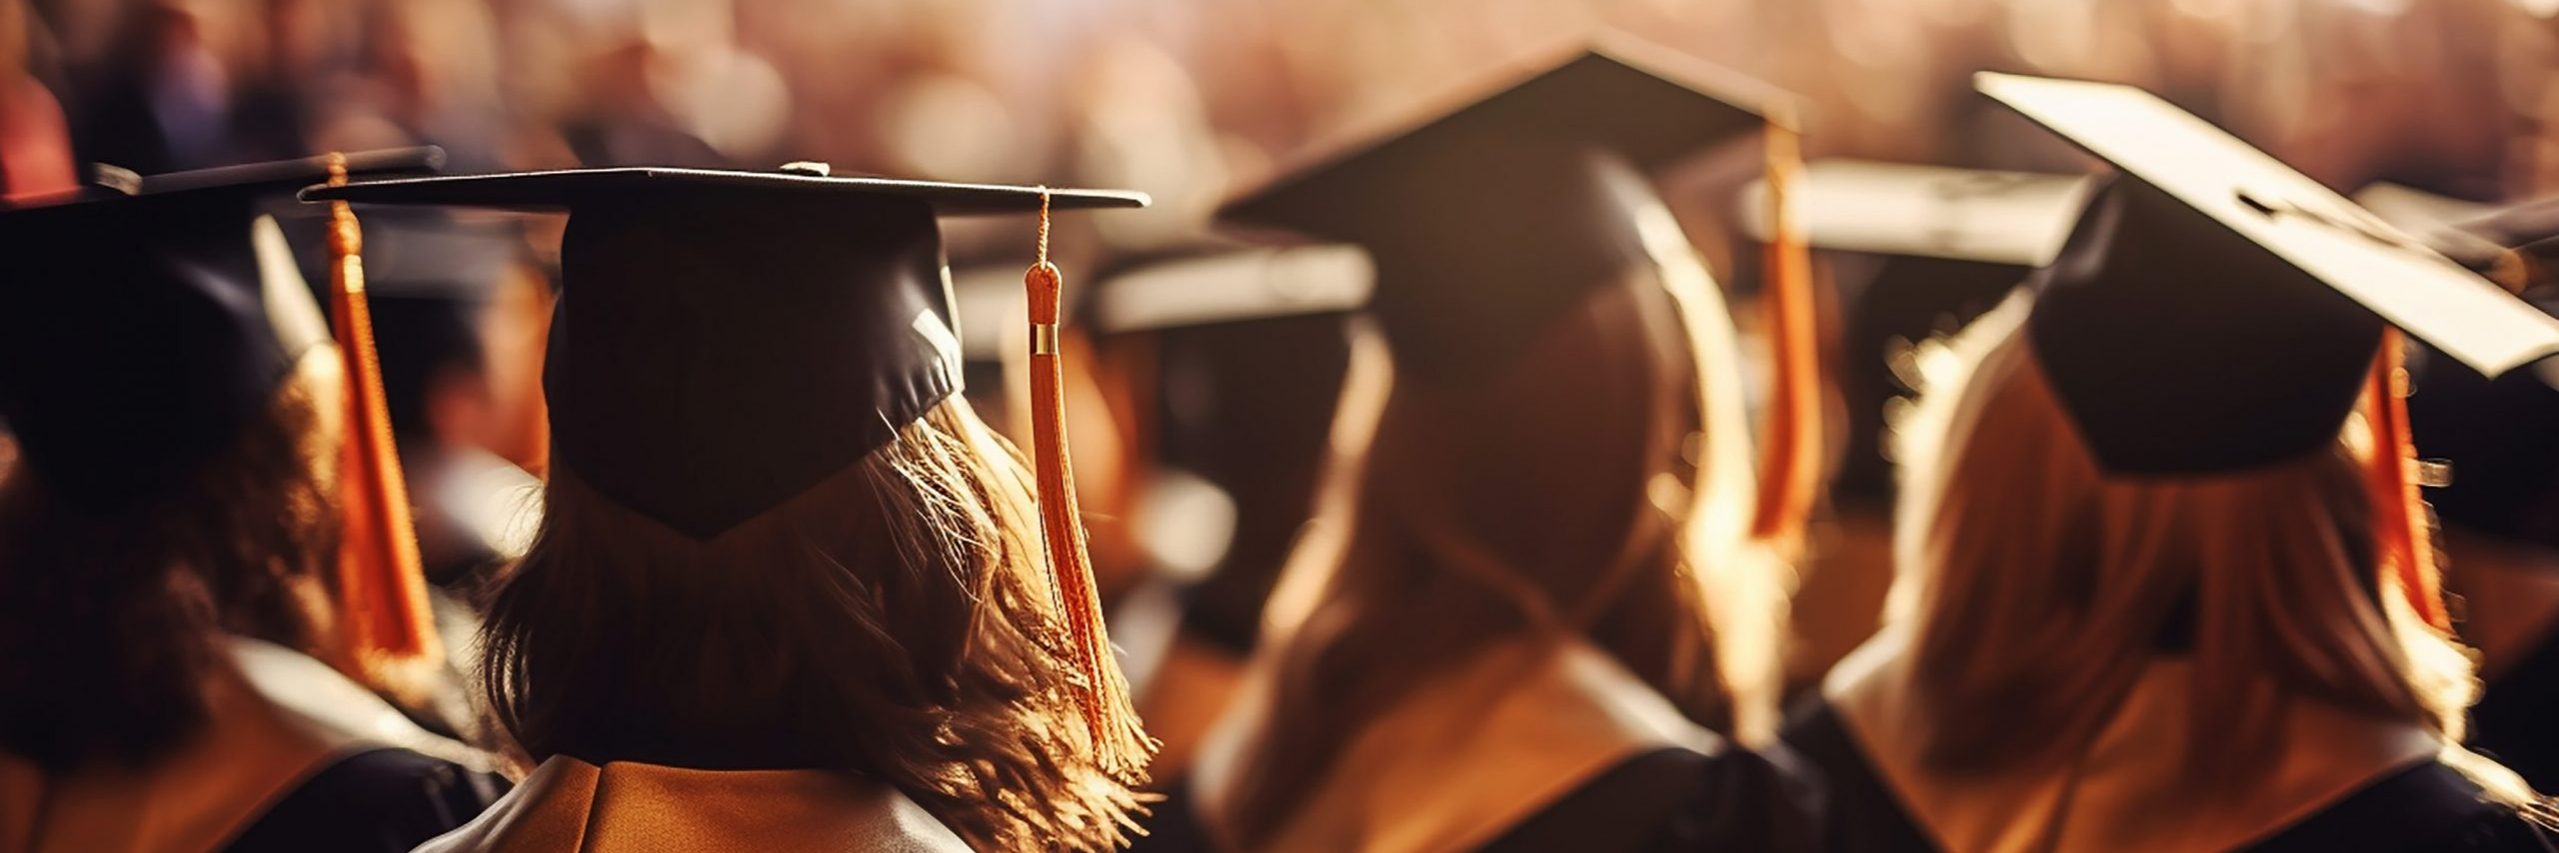 University graduates hit with increased student debt